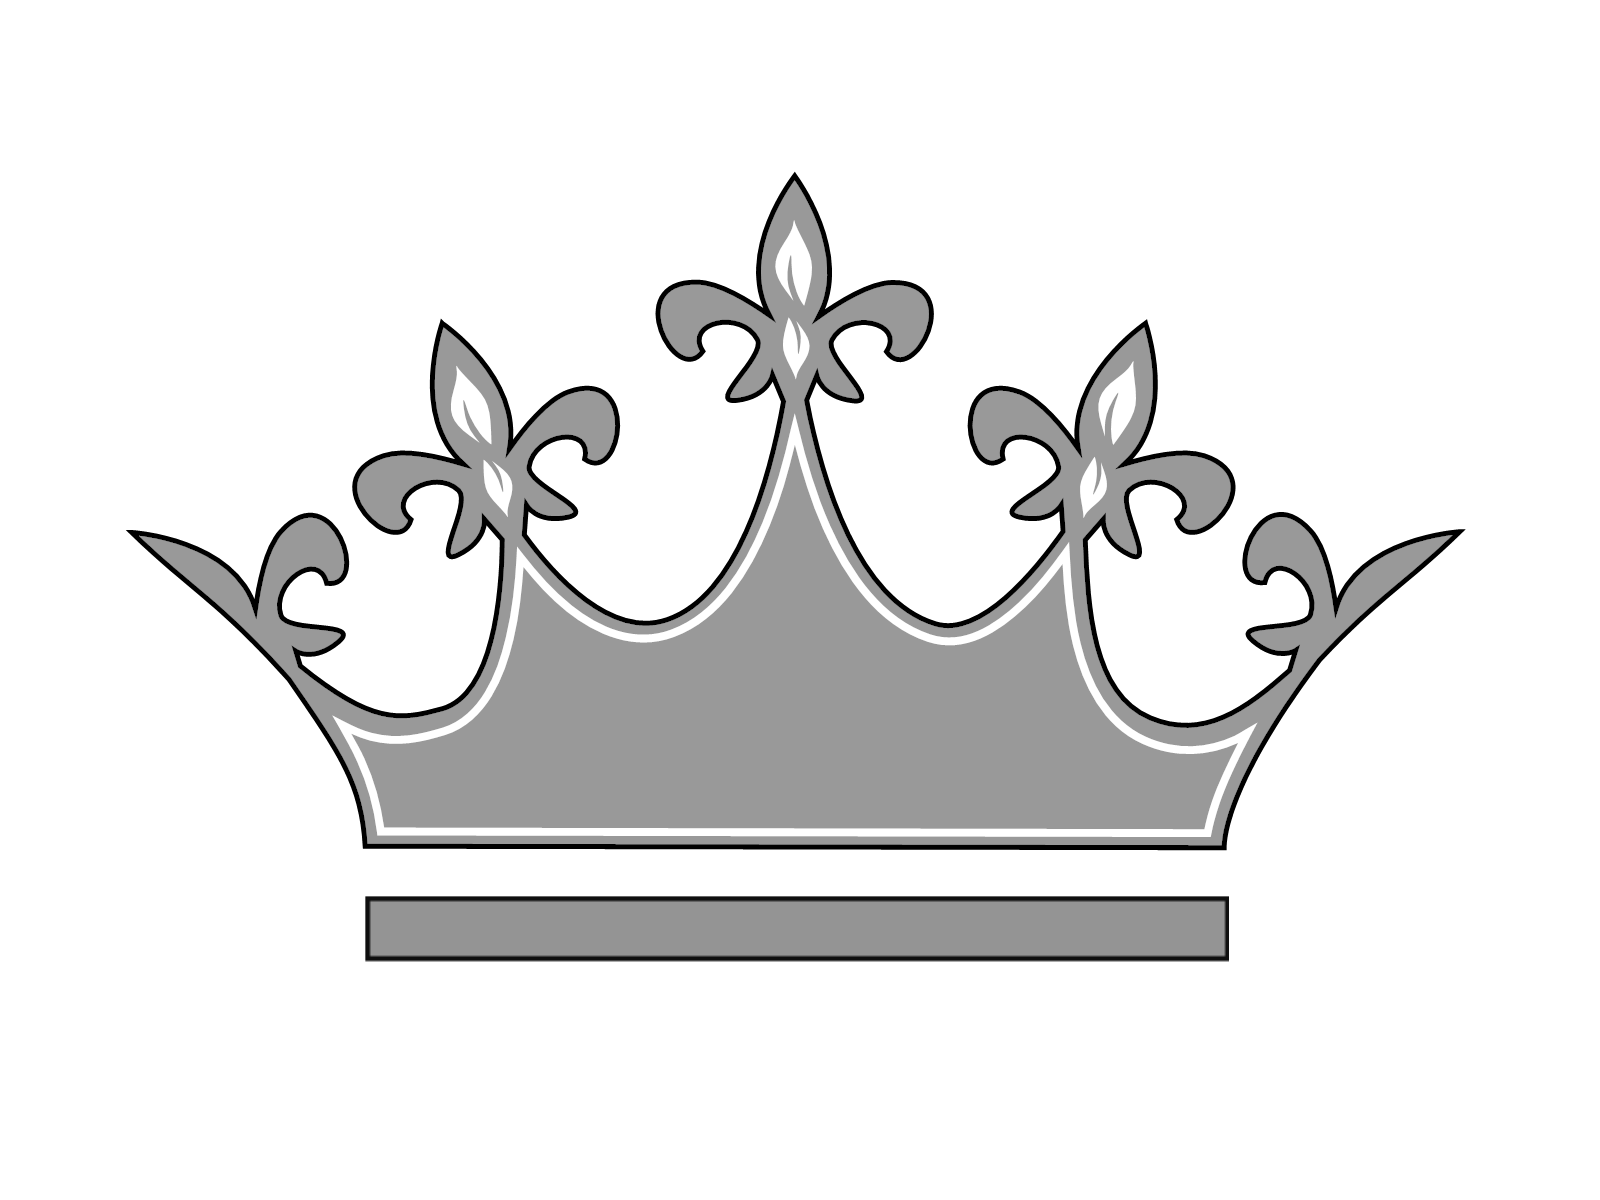 символ корона для ников пабг фото 99